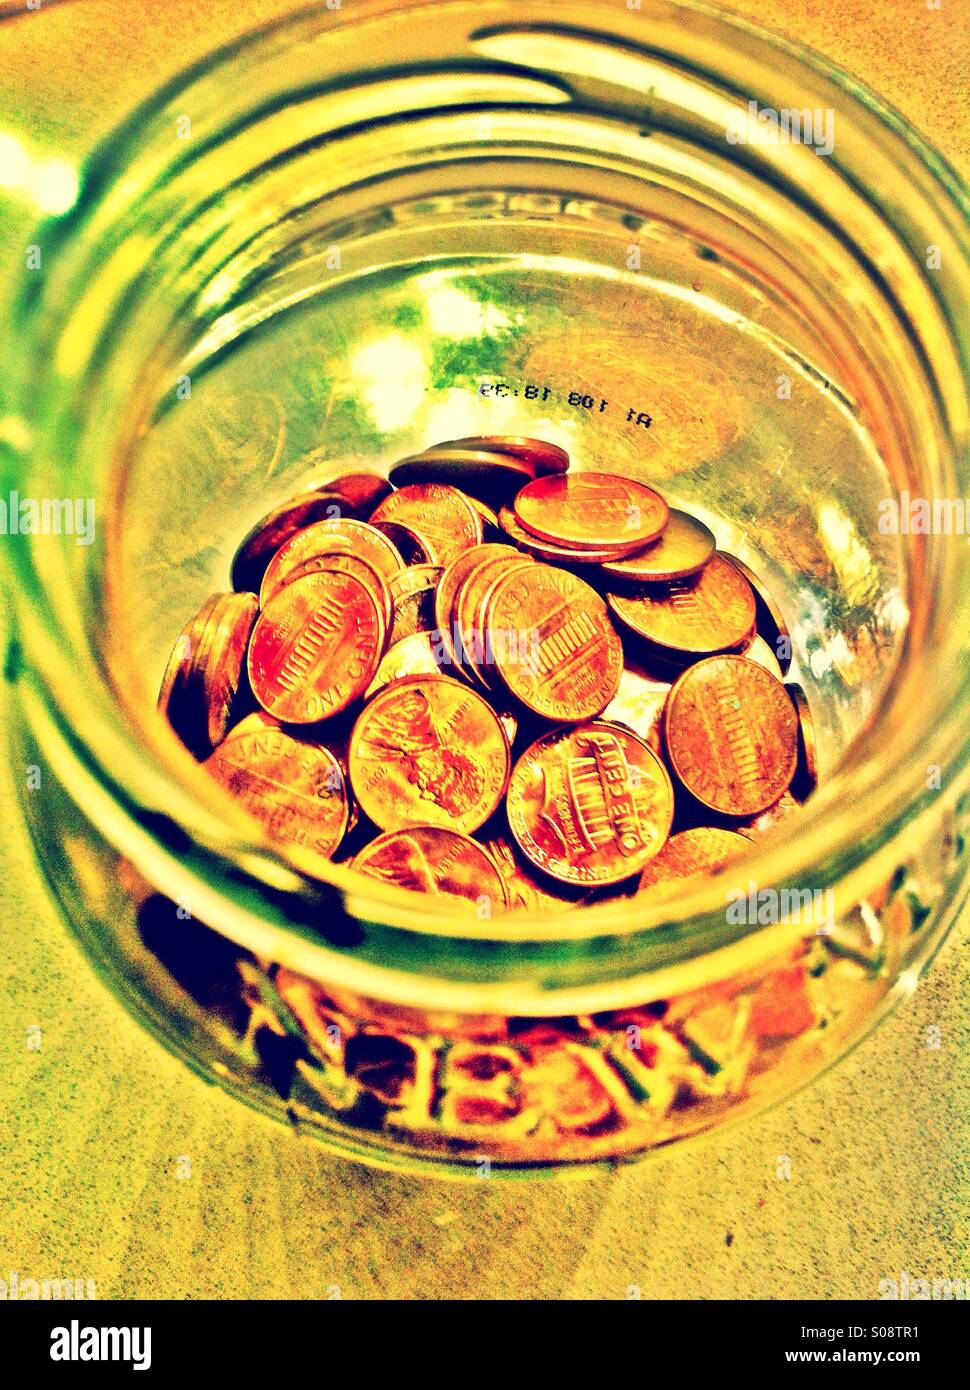 Penny jar Stock Photo